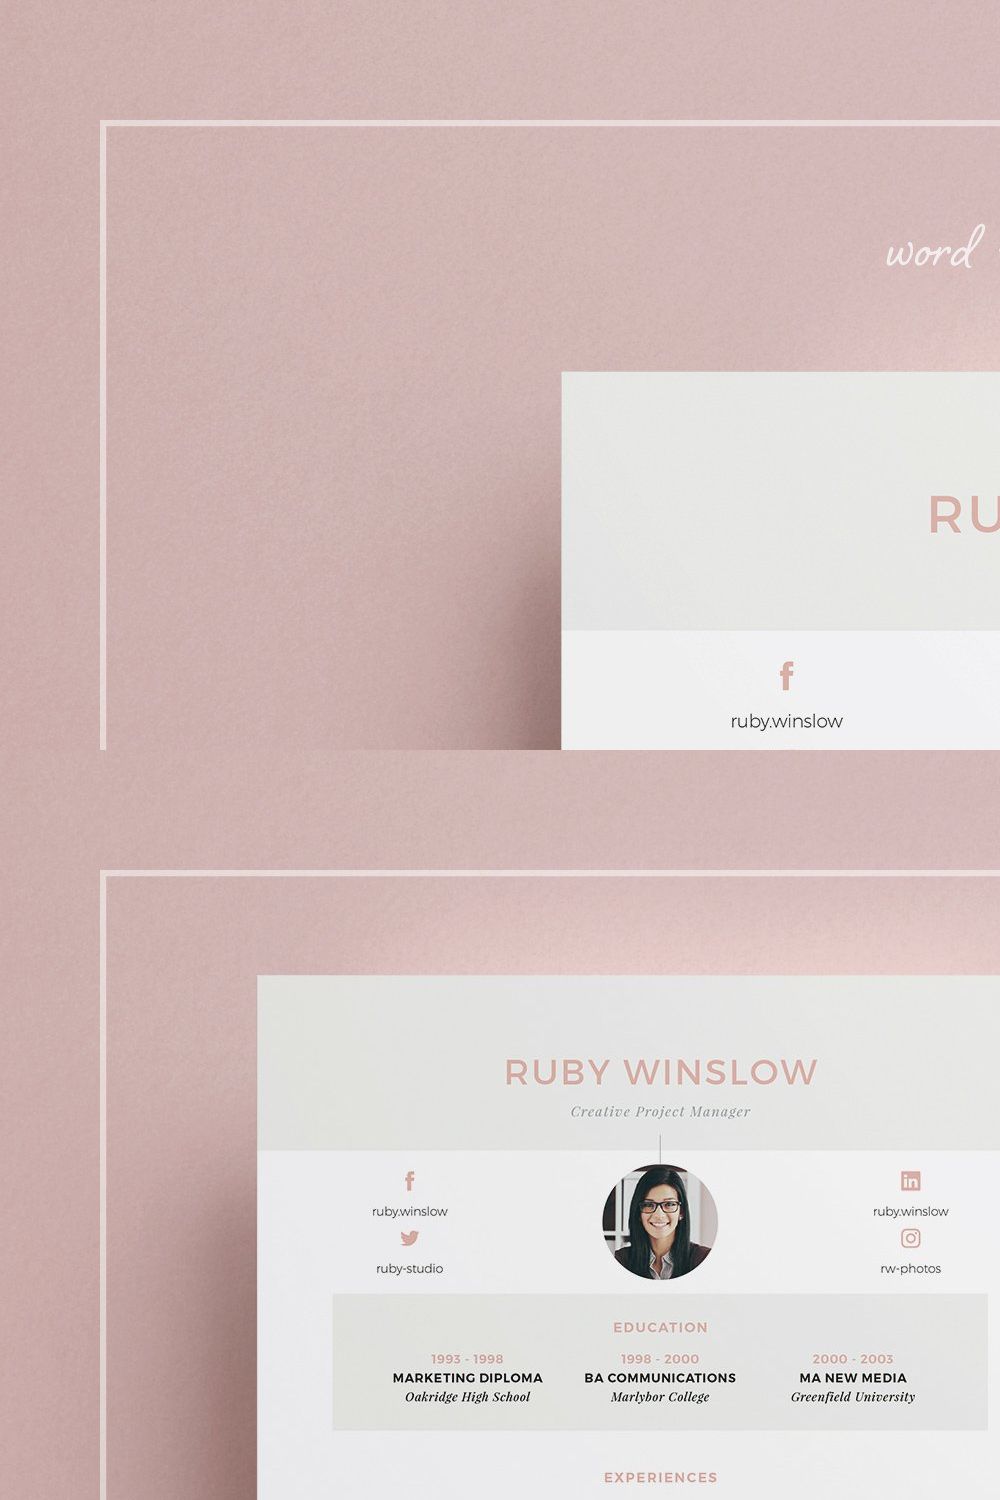 Resume/CV | Ruby pinterest preview image.